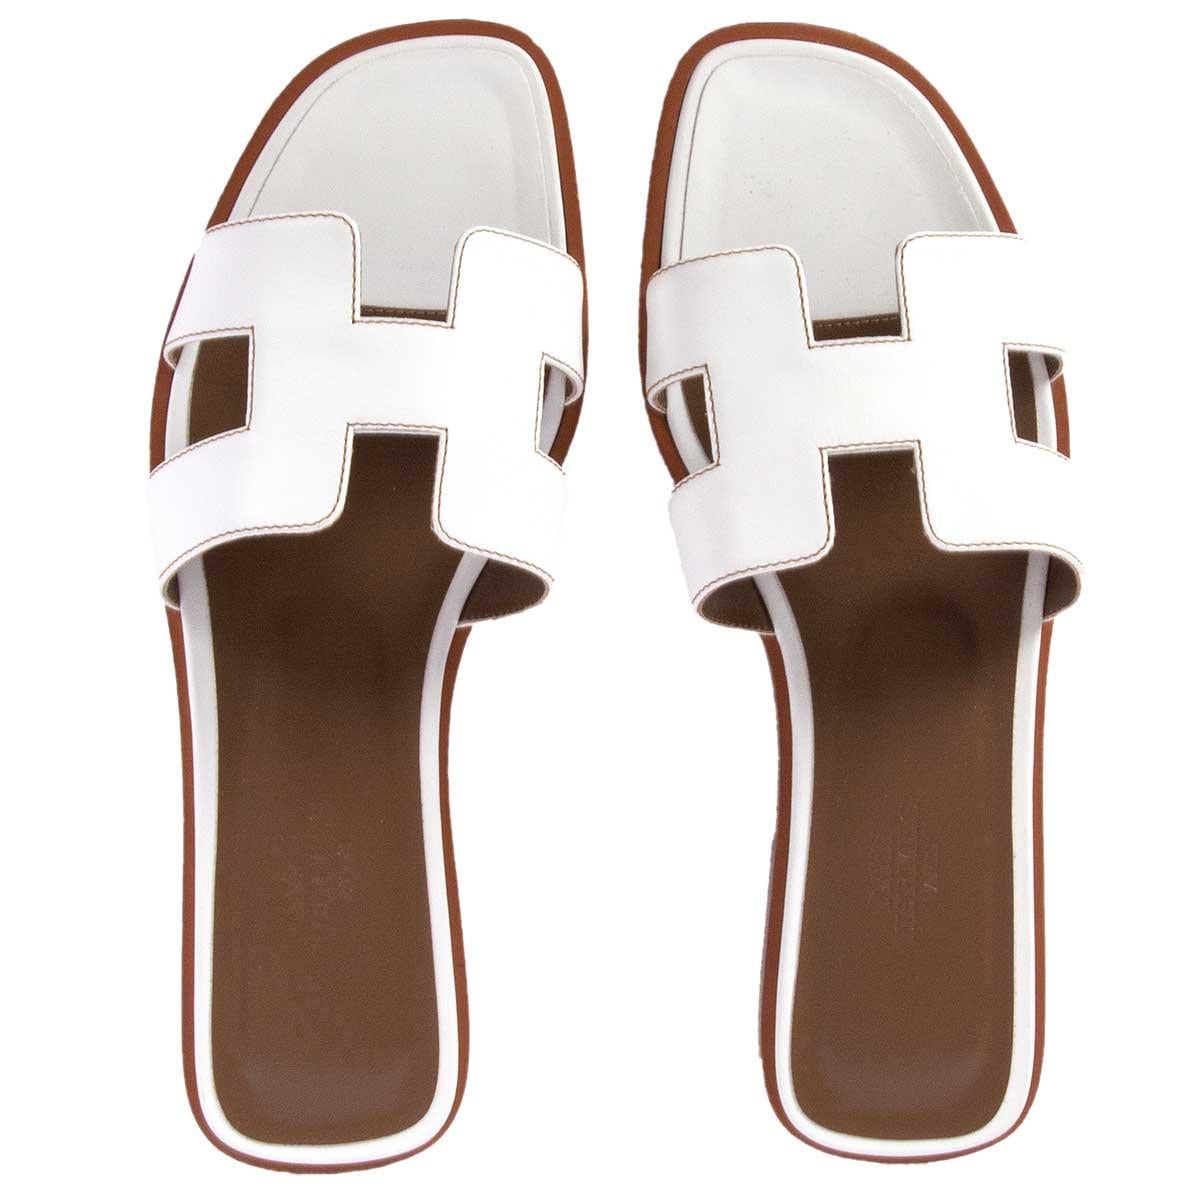 Women's HERMES white leather ORAN Flat Slides Sandals Shoes 37